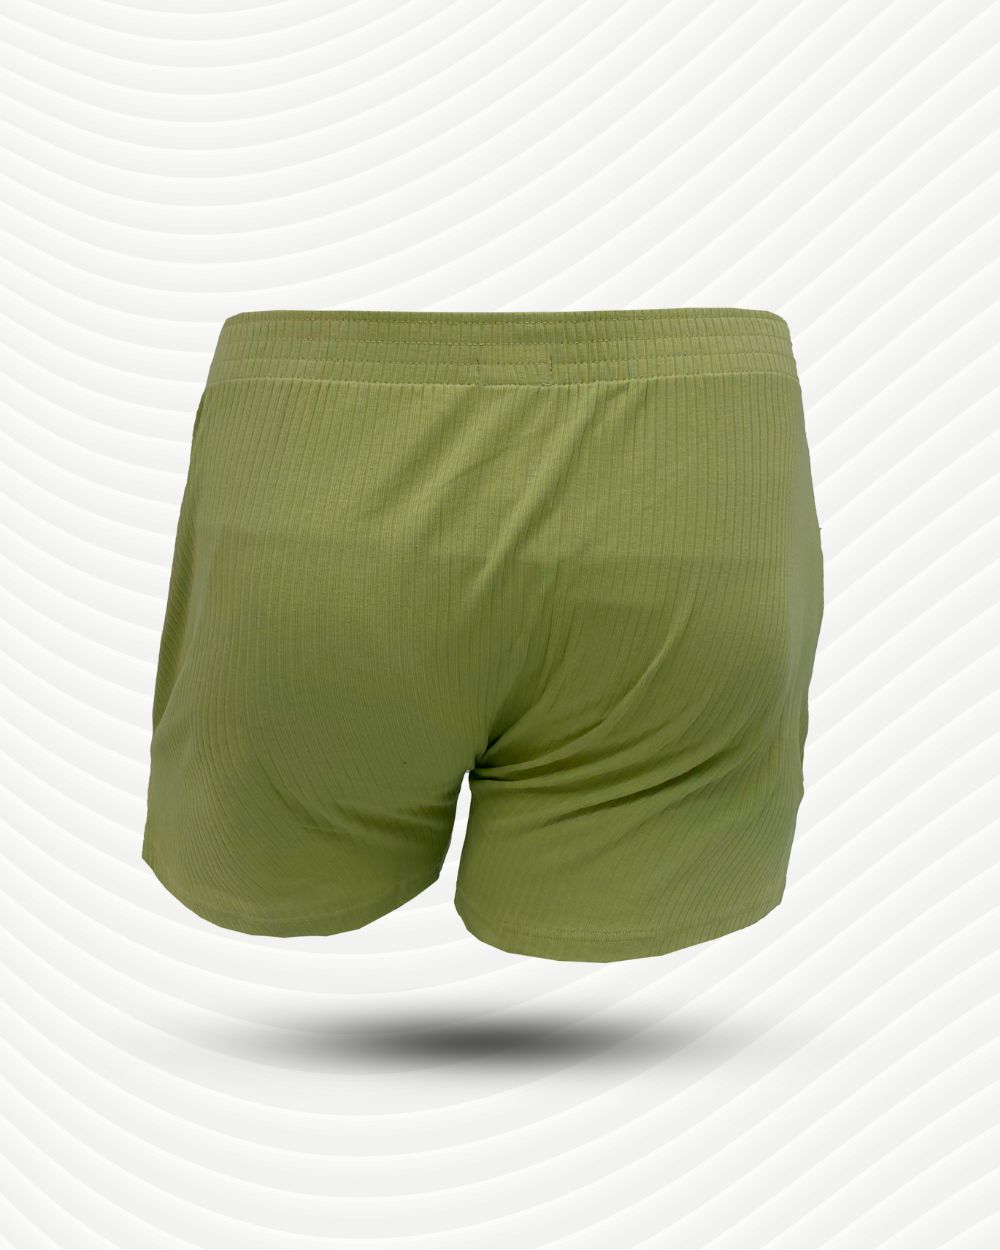 Nostalgia Comfort Lounge Boxer Shorts - Sorber Green [4639]